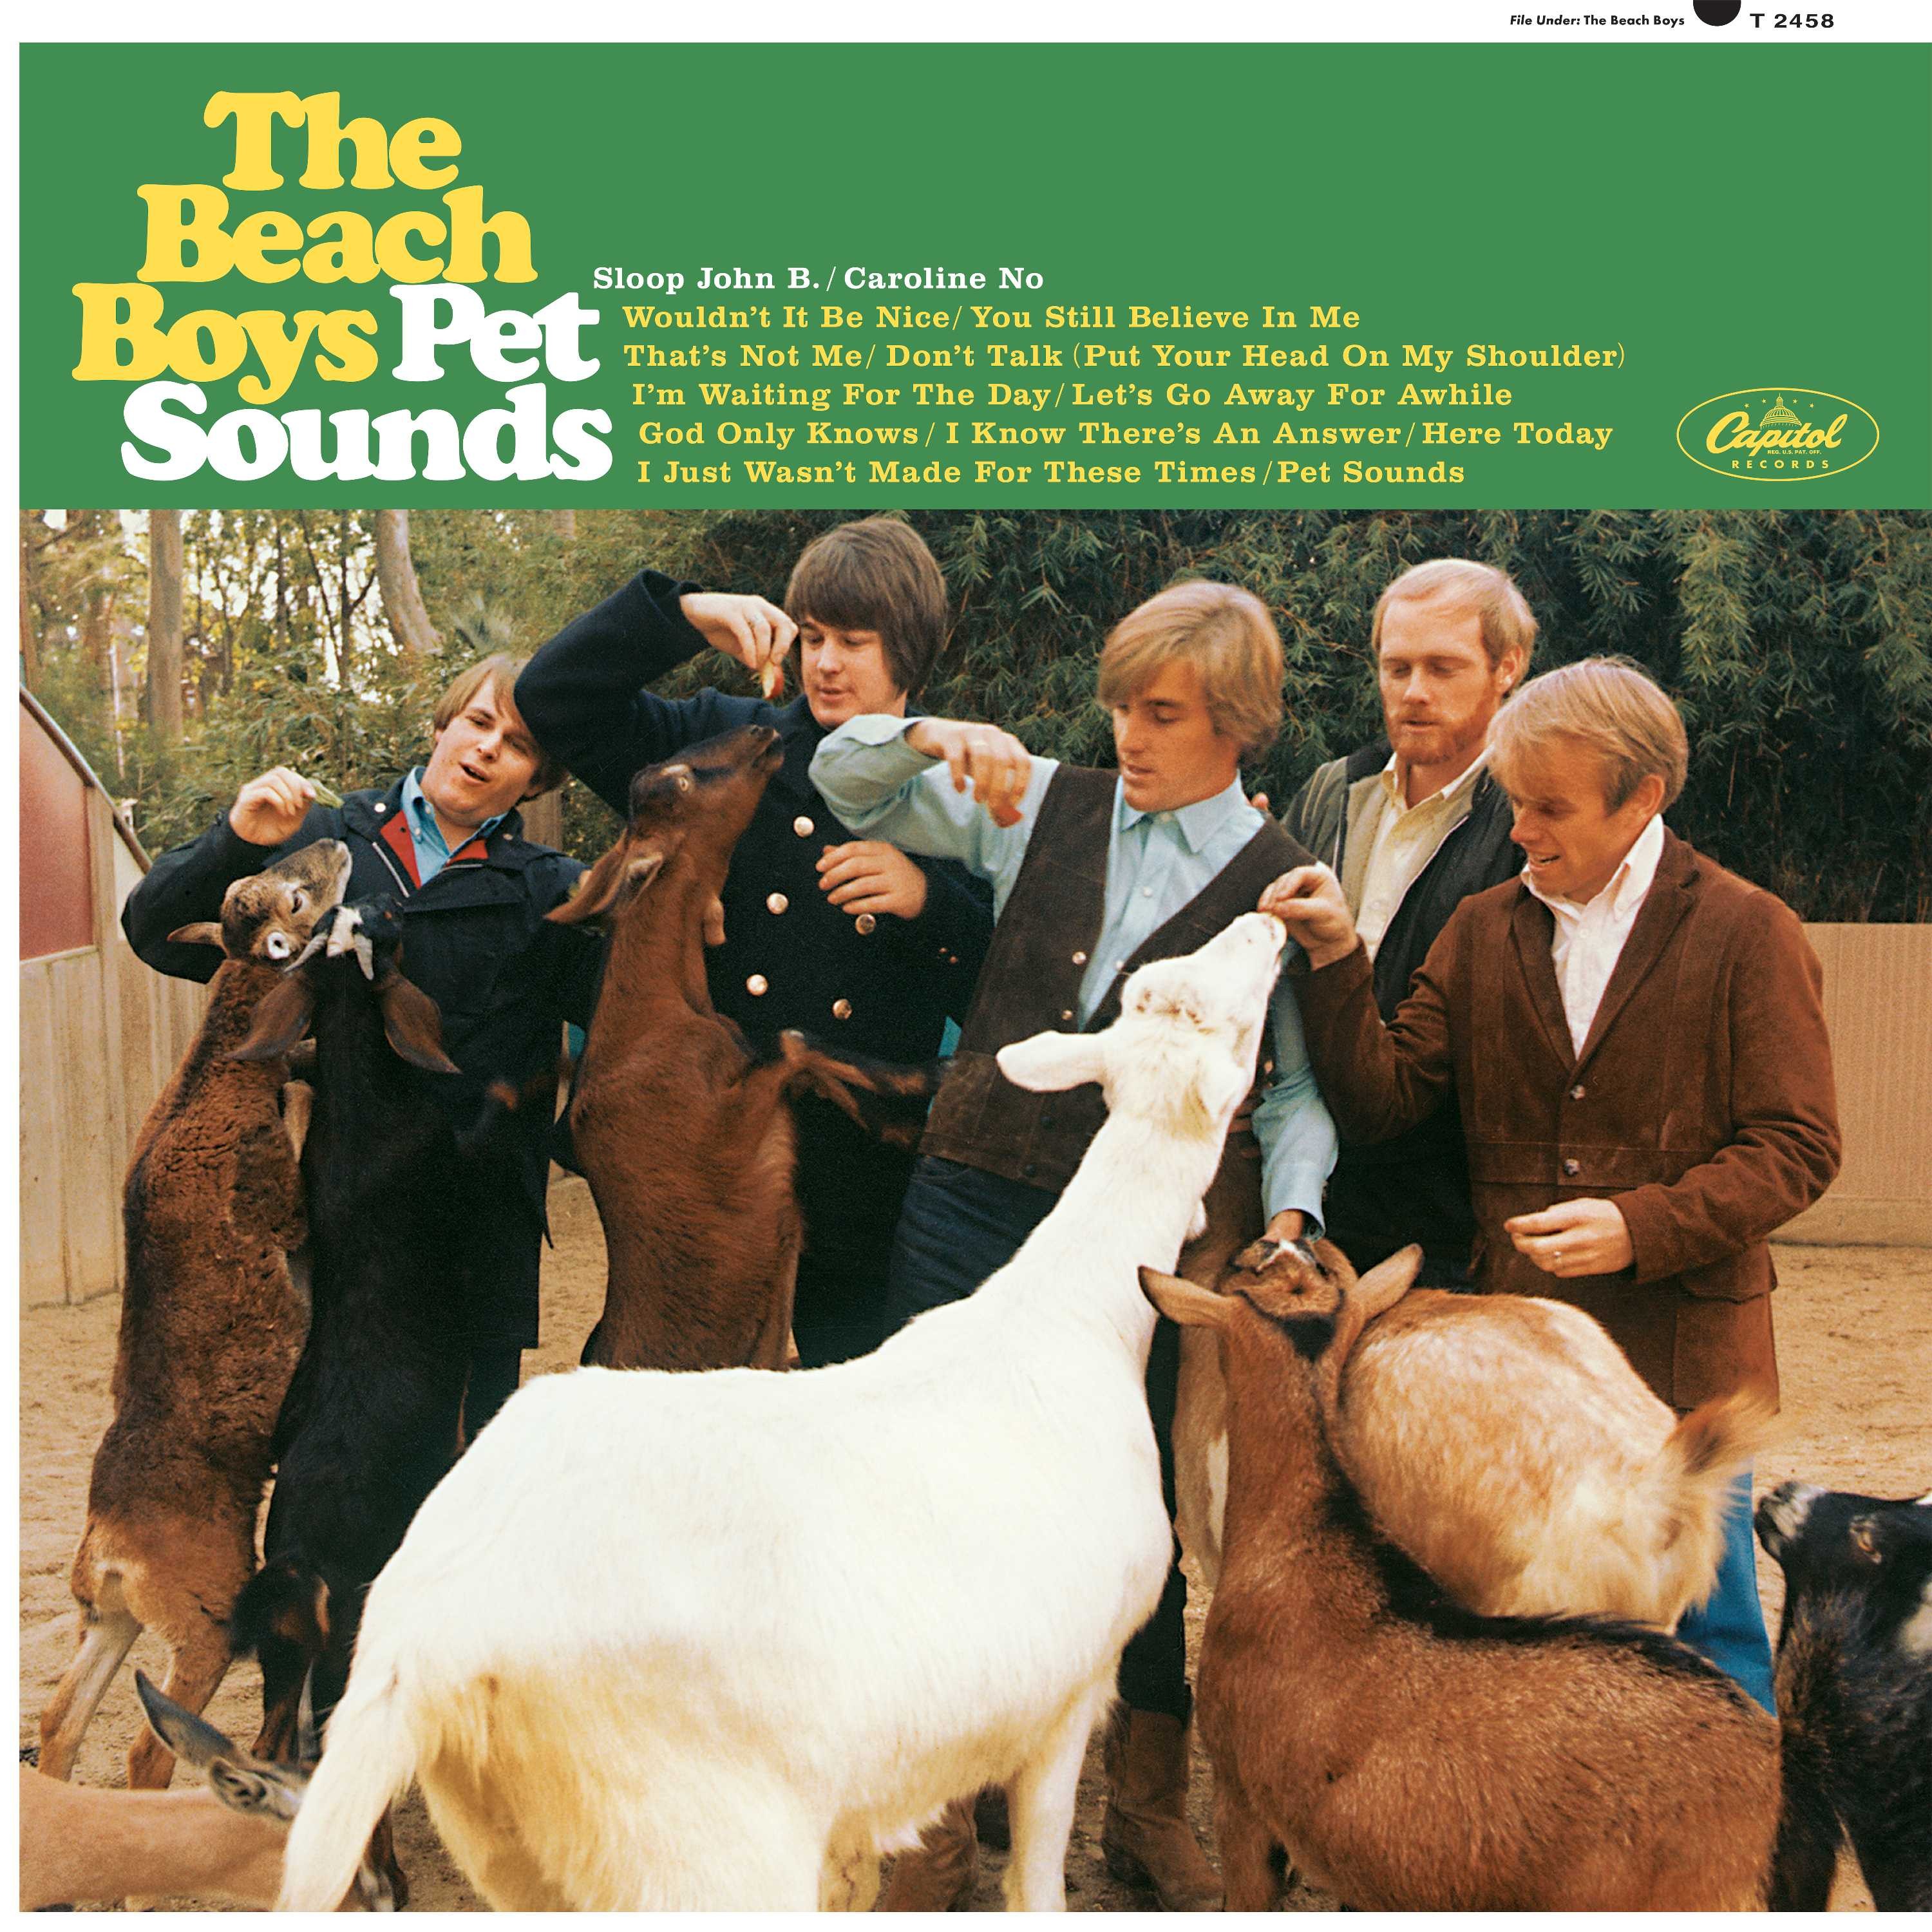 The Beach Boys - Pet Sounds (Stereo) LP